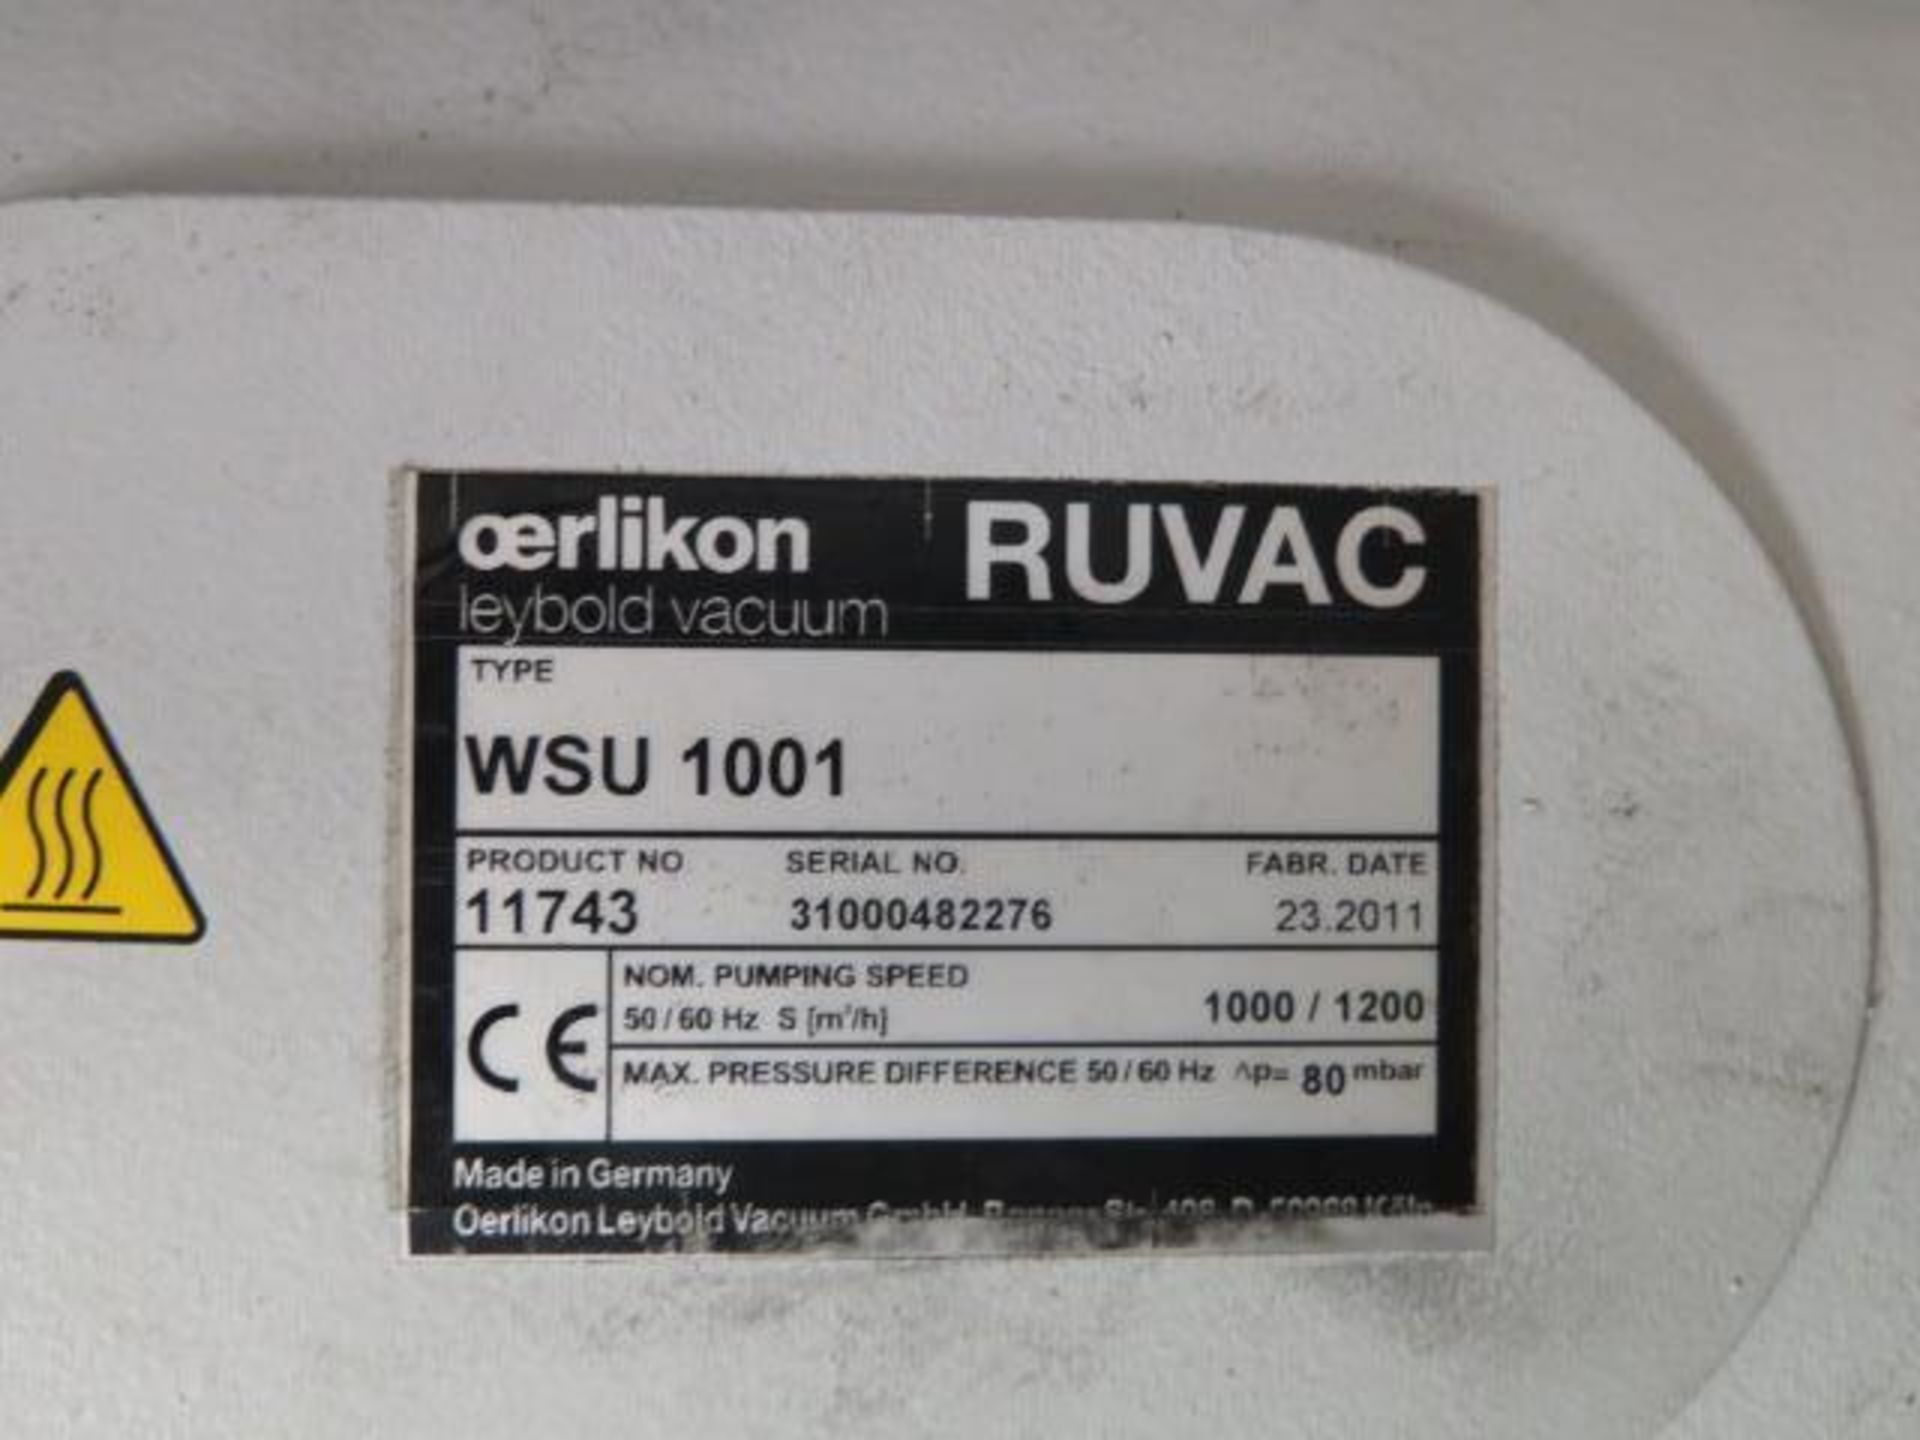 2011 Ruvac mdl. WSU 1001 3kW Vacuum Pump (SOLD AS-IS - NO WARRANTY) - Image 8 of 8